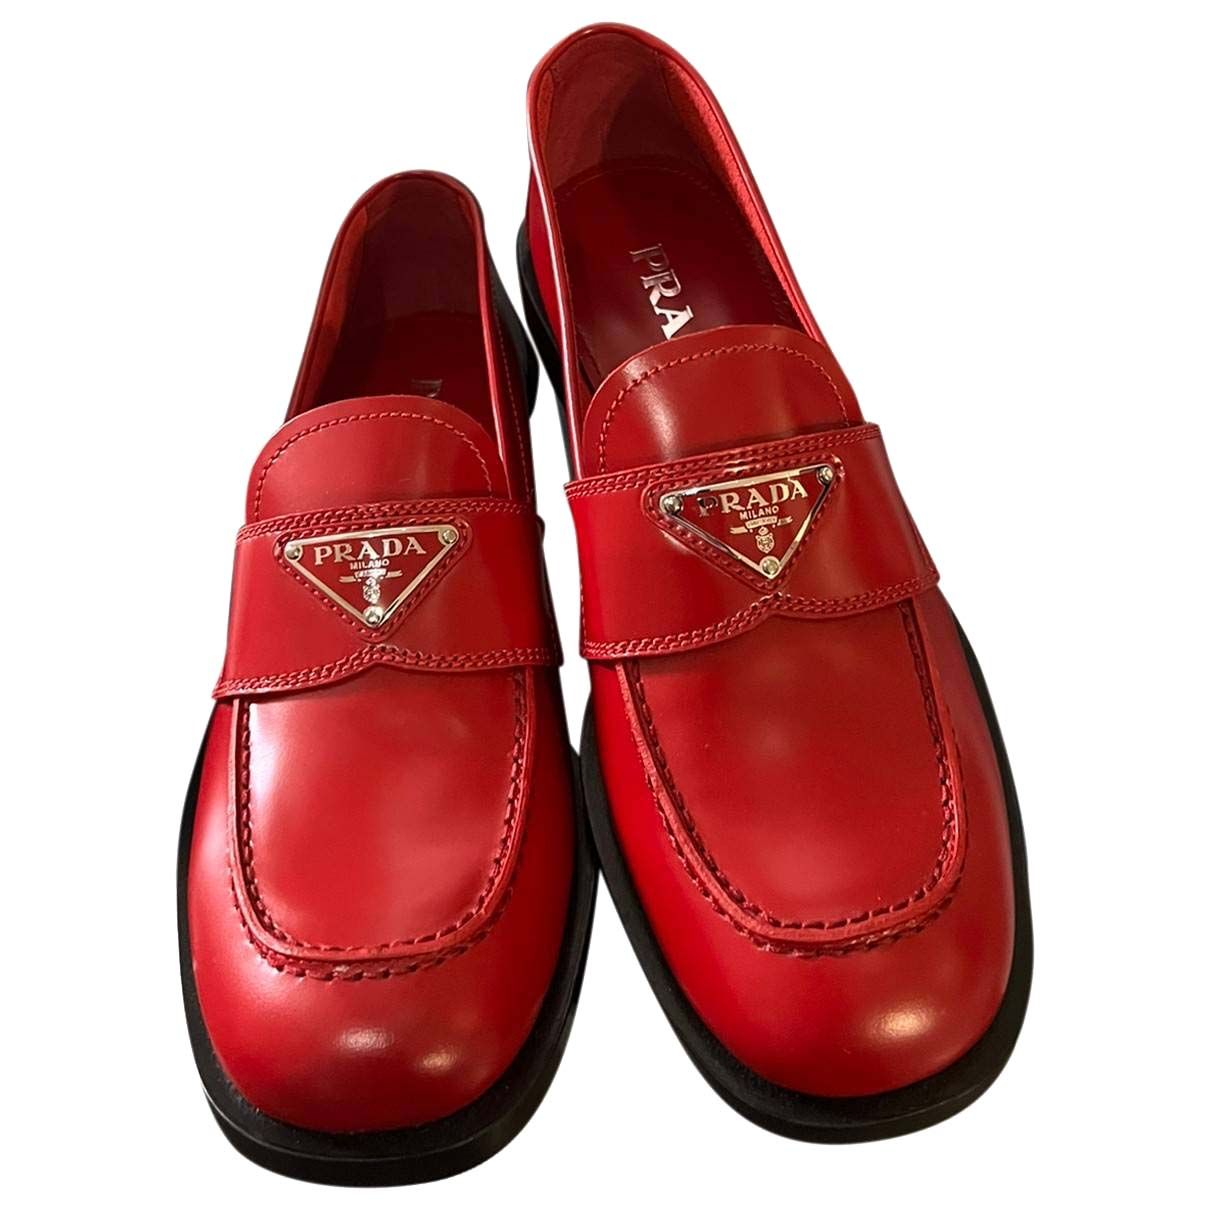 Prada loafers to buy now – Best Prada loafers